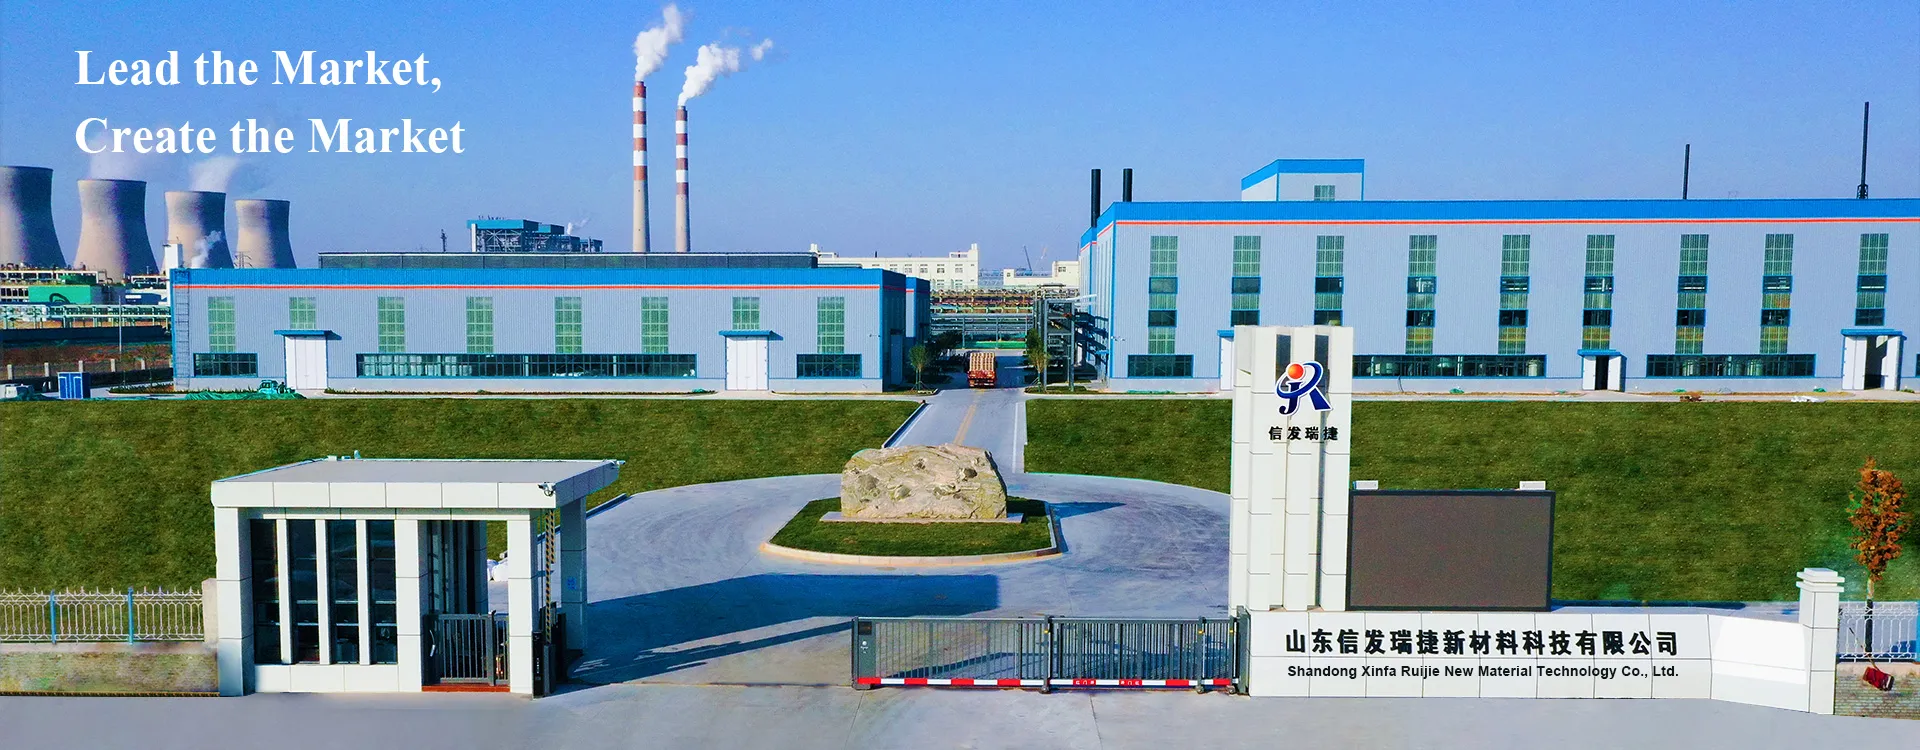 Shandong Xinfa Ruijie New Material Technology Co., Ltd.